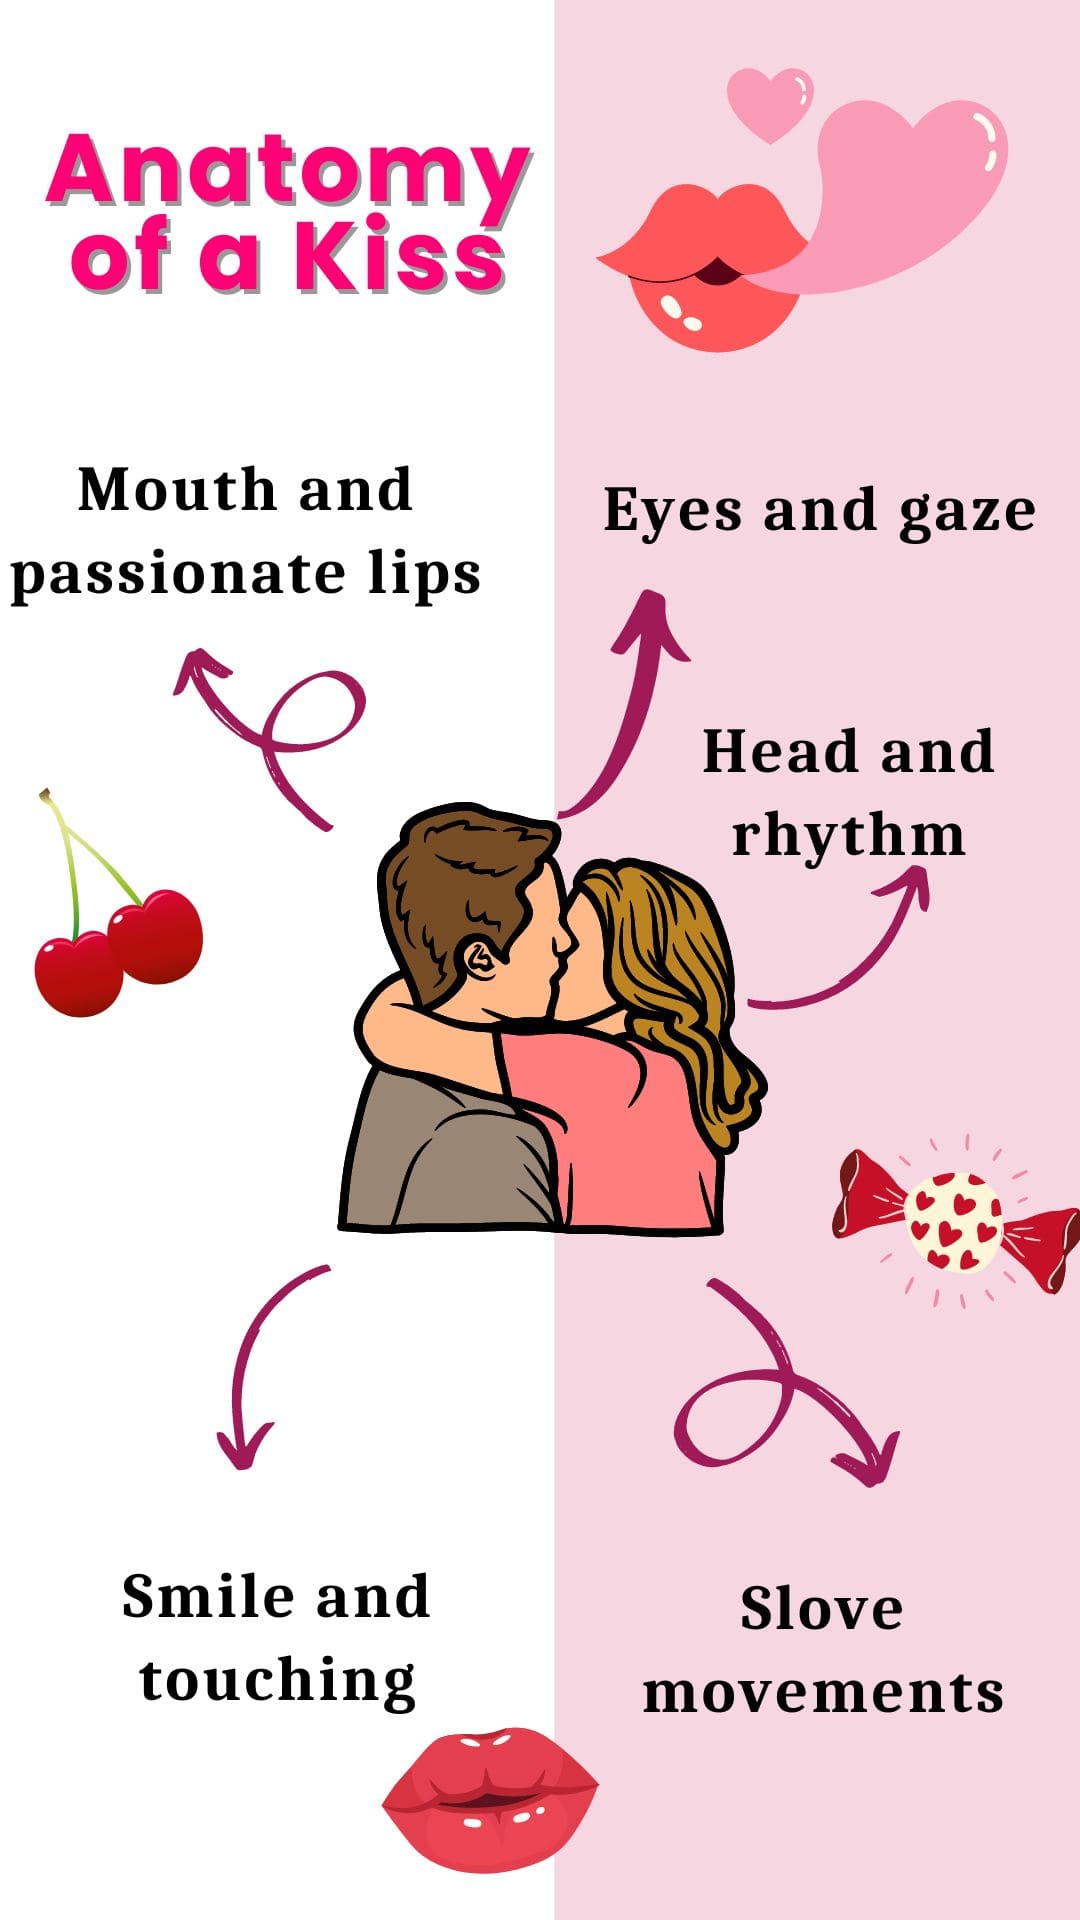 Anatomy of a Kiss